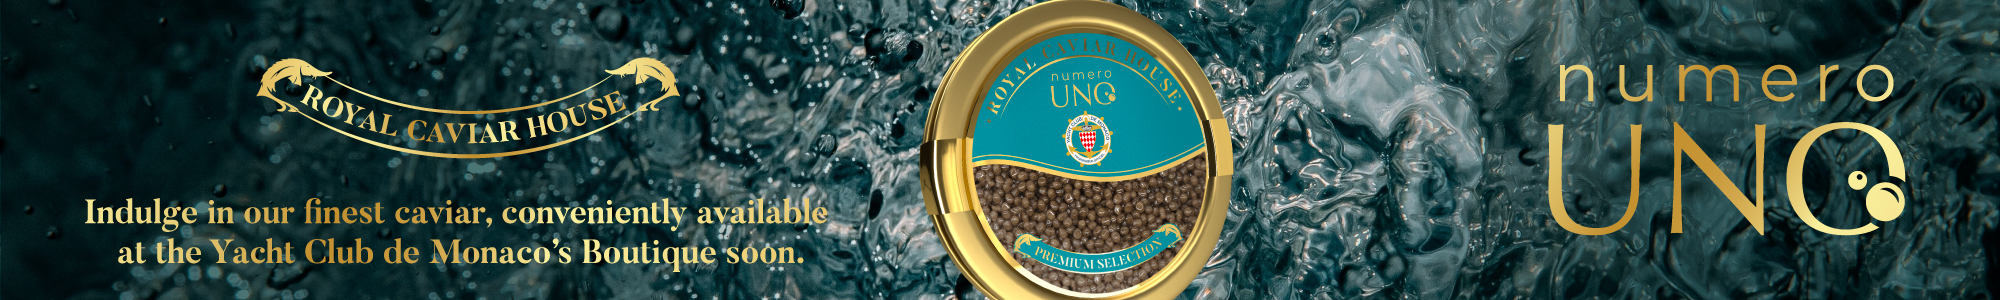 royal-caviar-house-numero-uno-web-banner-Length